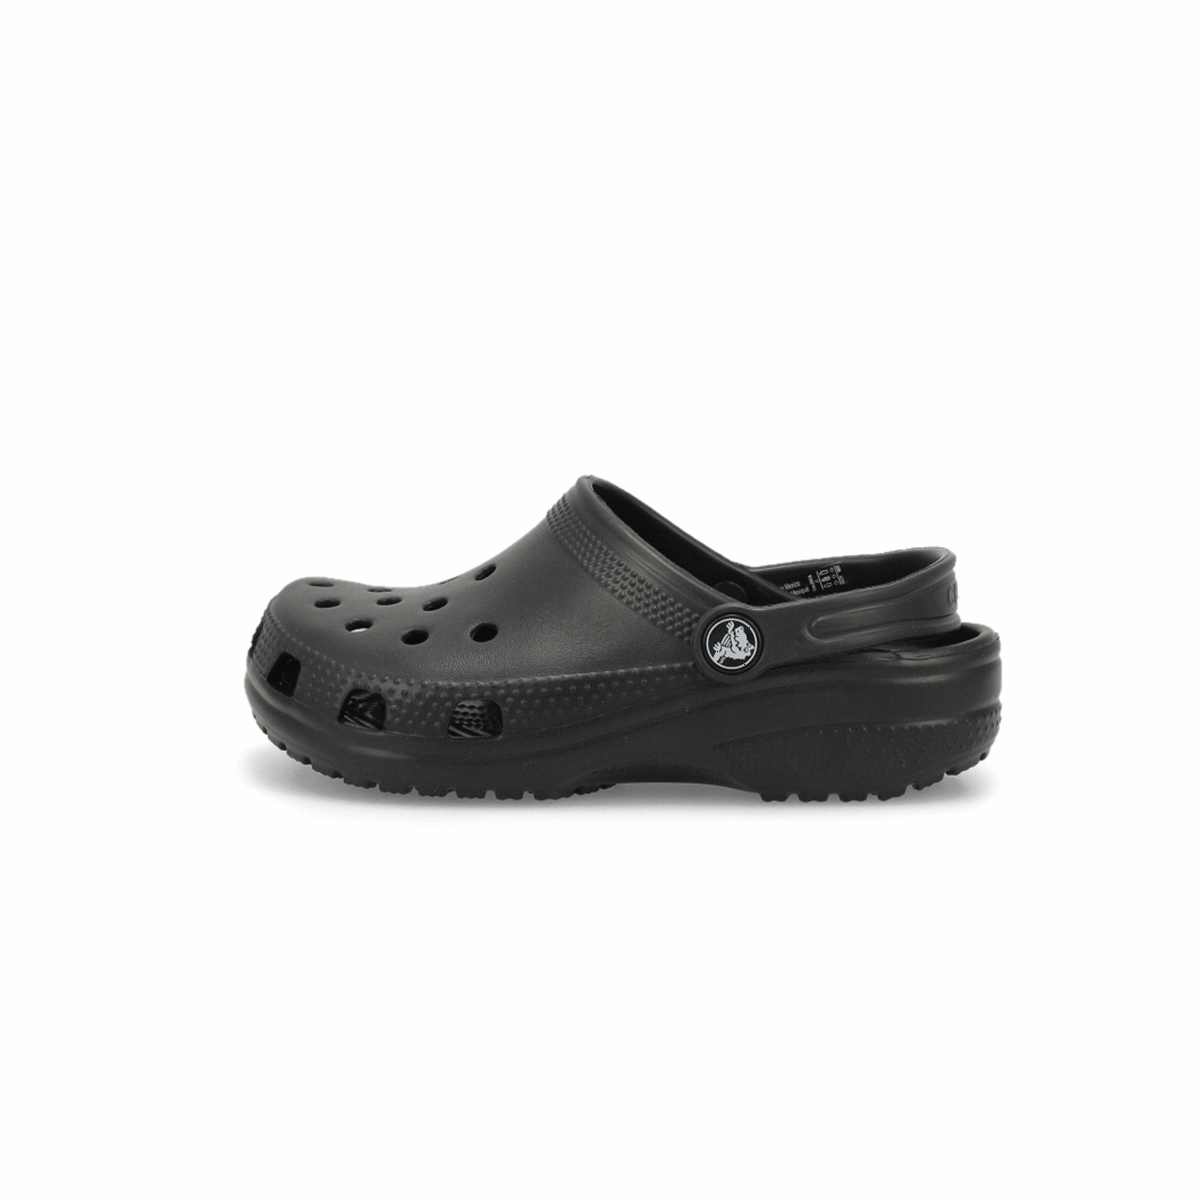 Crocs Kid's Classic EVA Comfort Clog - Black | SoftMoc USA